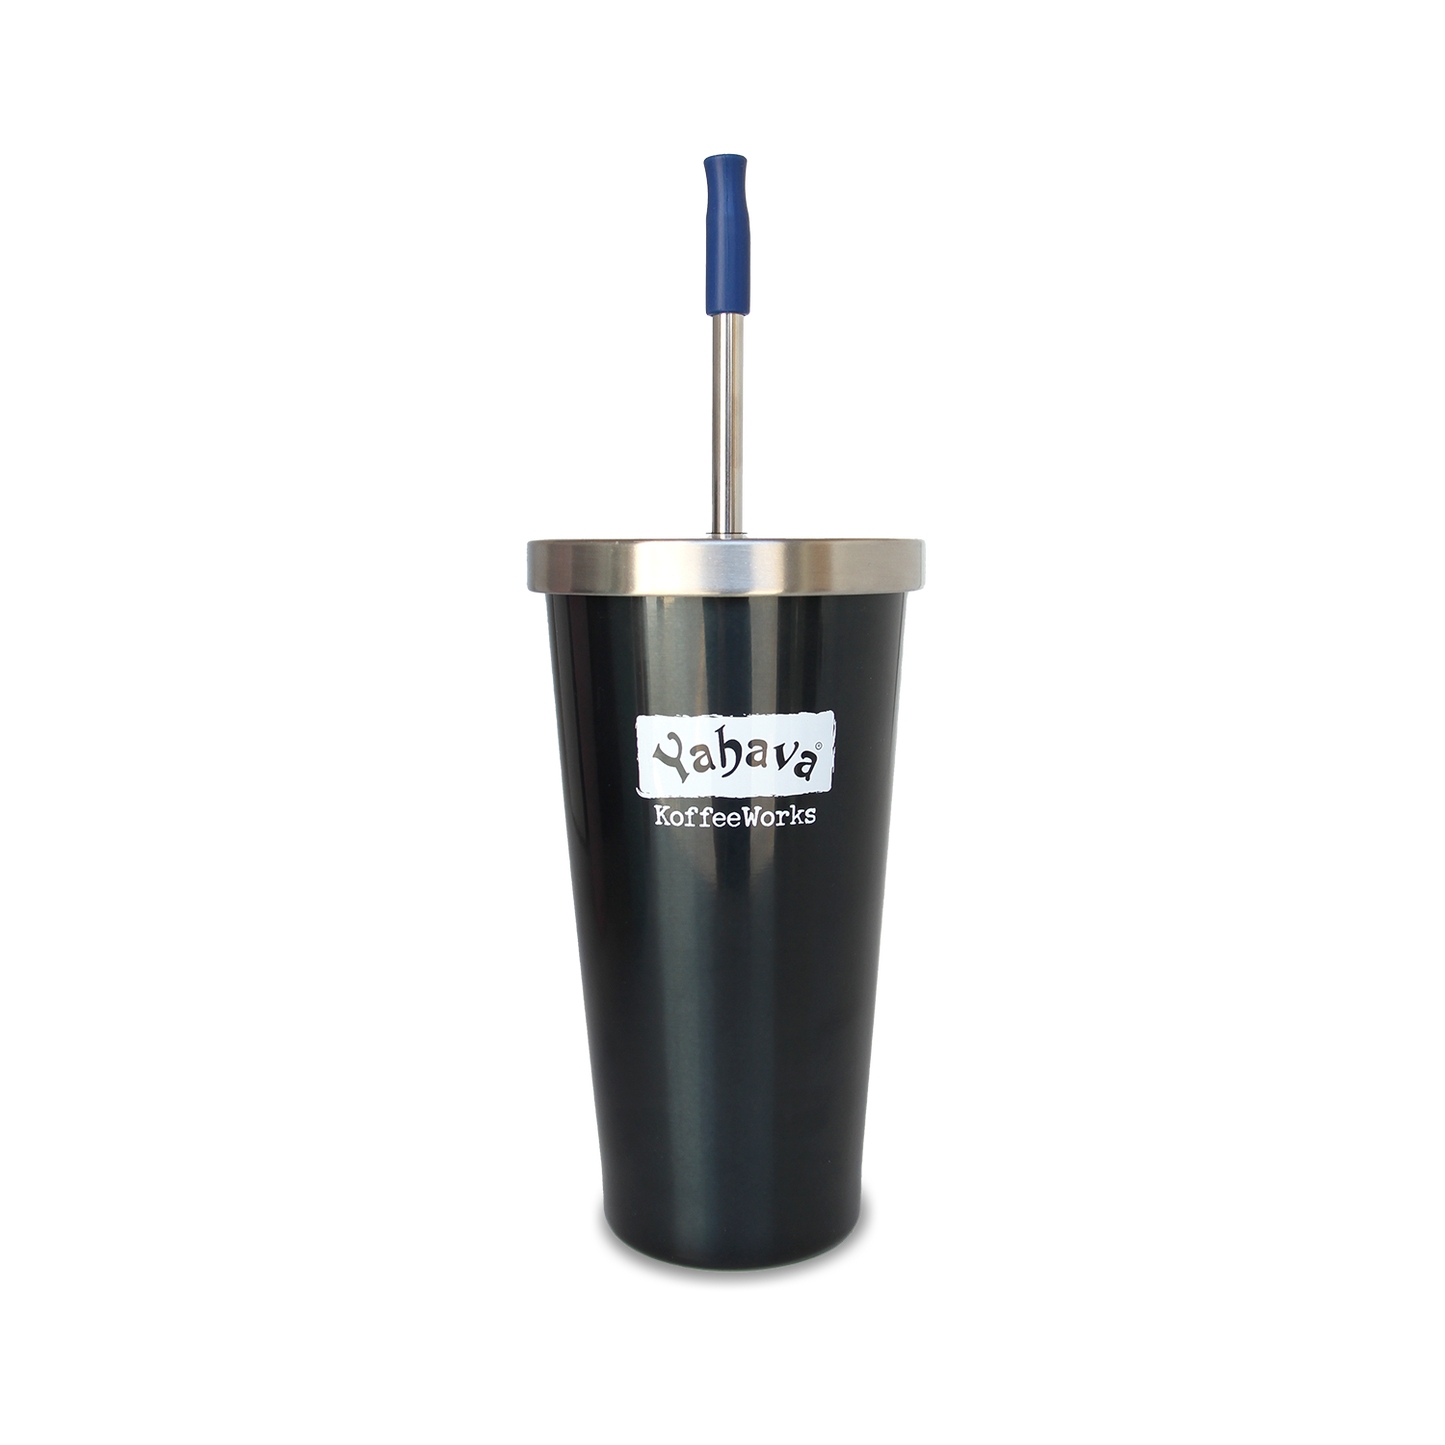 Yahava Dark Blue Iced Drink Travel Cups - Tumbler